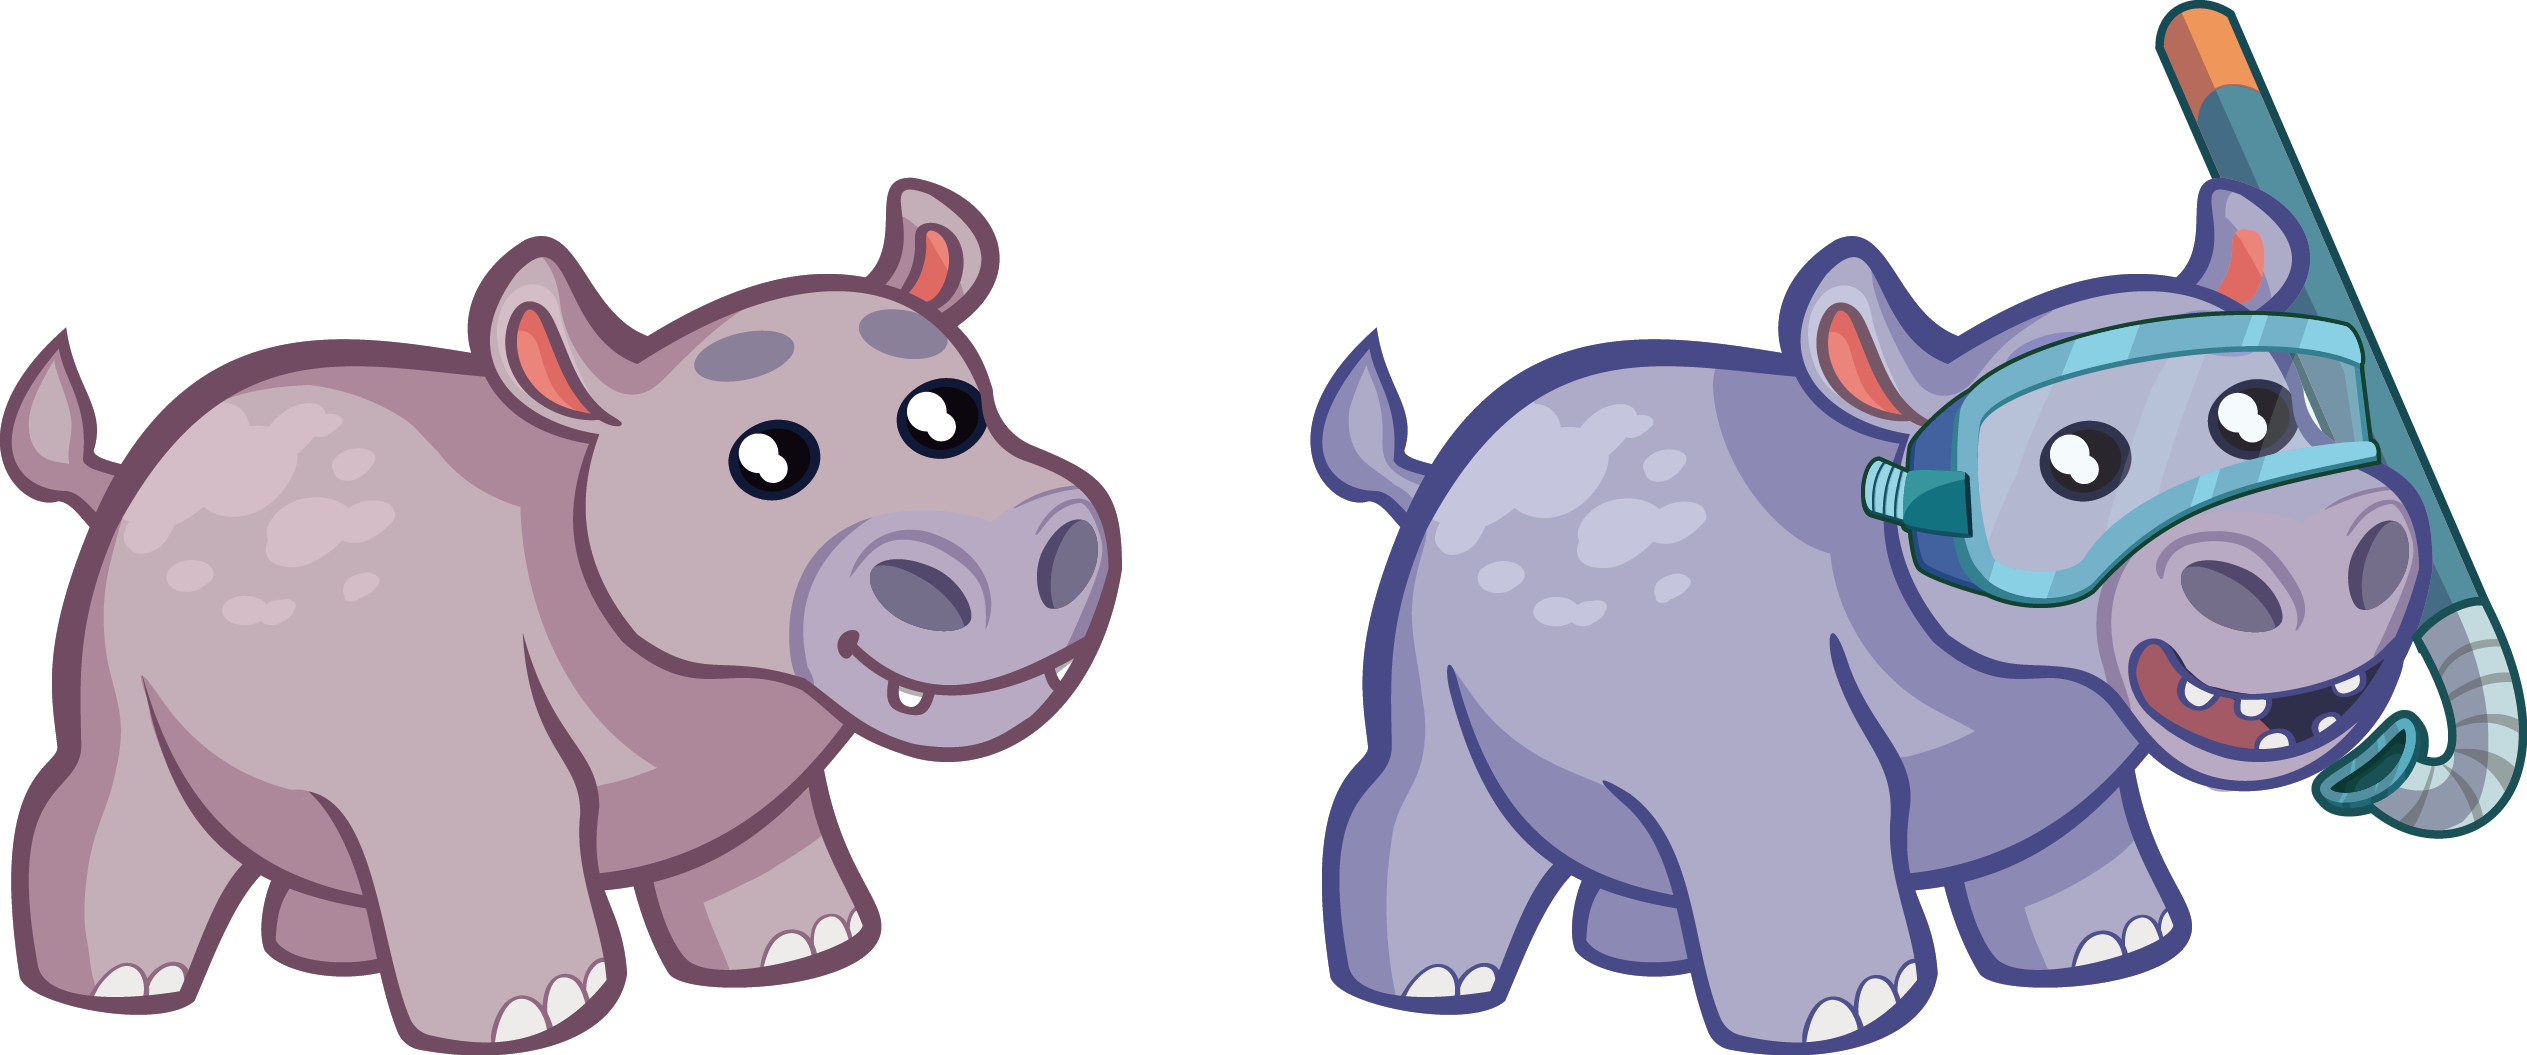 Hippopotamus Drawing - Drawing (2527x1055)